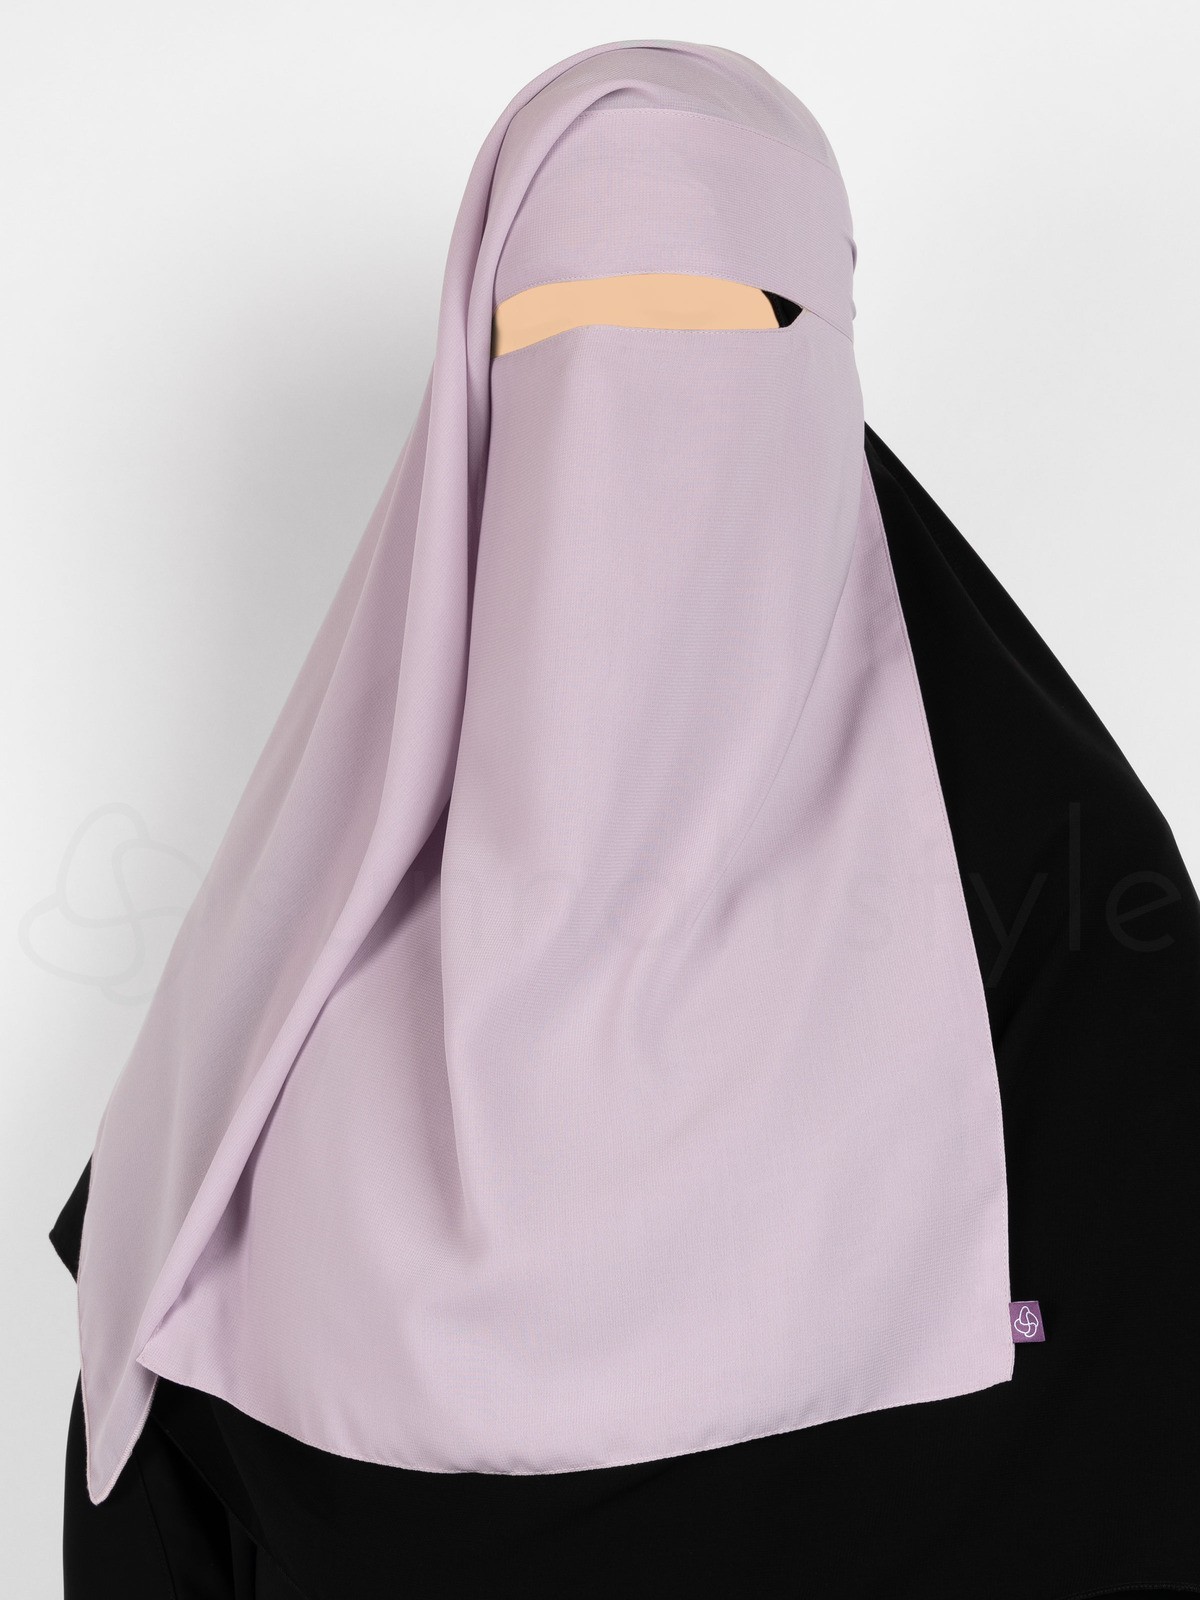 Sunnah Style - Narrow No-Pinch Two Layer Niqab (Lavender)